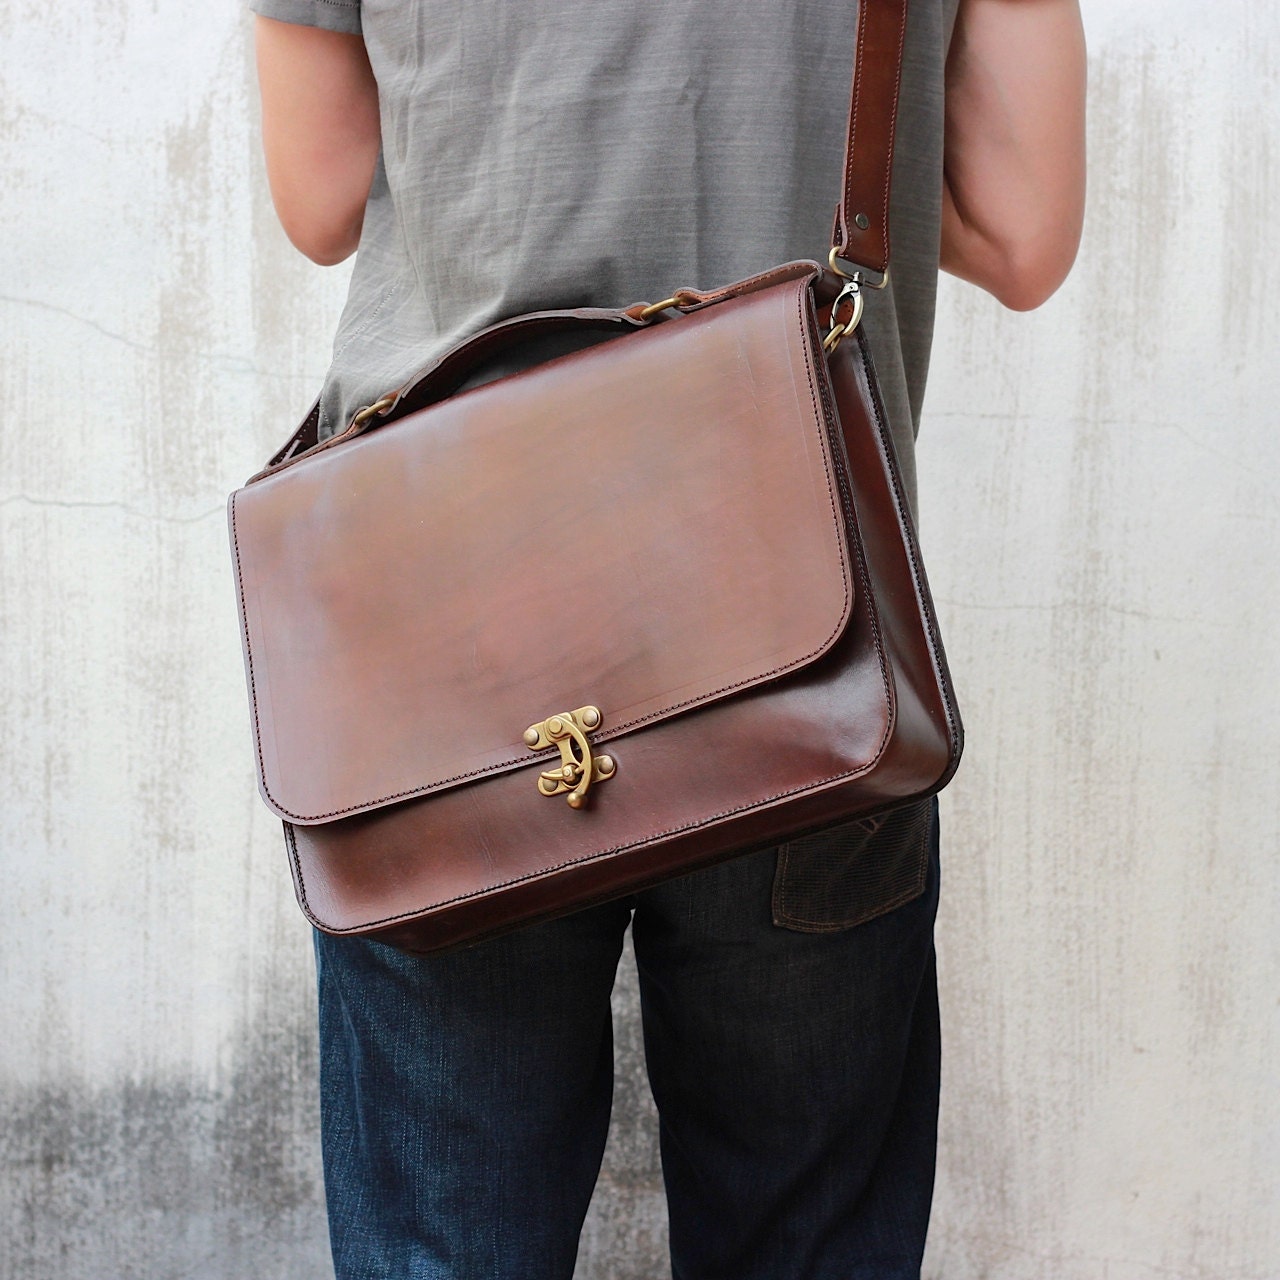 CIJ SALE, Leather Briefcase -- Men's Briefcase - Leather Briefcases - Messenger Bag - Women's Leather Briefcase - Brown Business Briefcases - JooJoobs